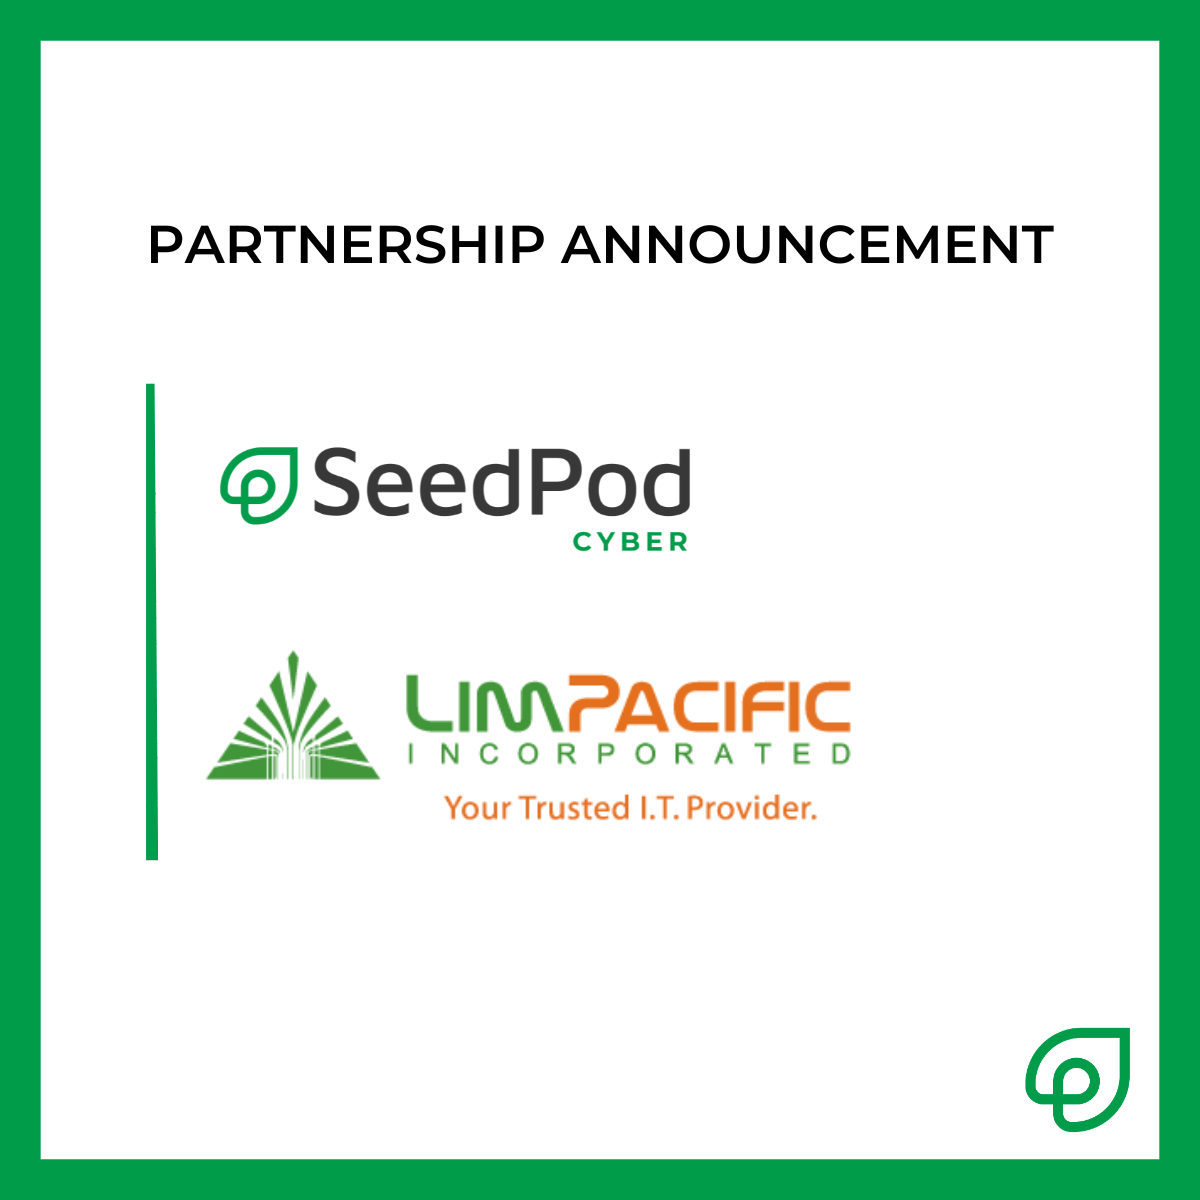 Partnership announcement graphic